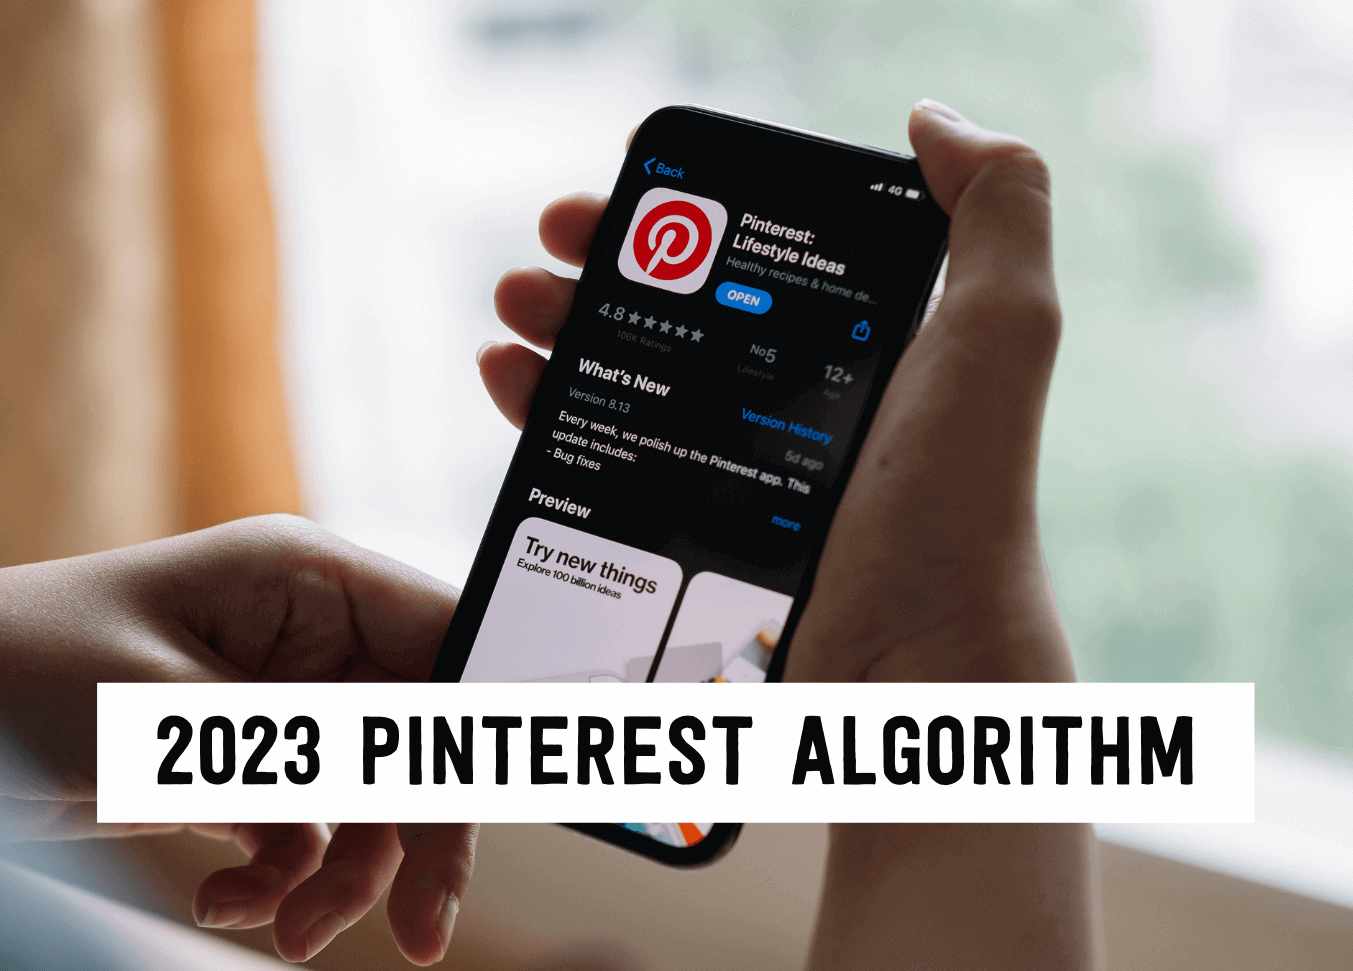 2023 Pinterest algorithm | Tizzit.co - start and grow a successful handmade business